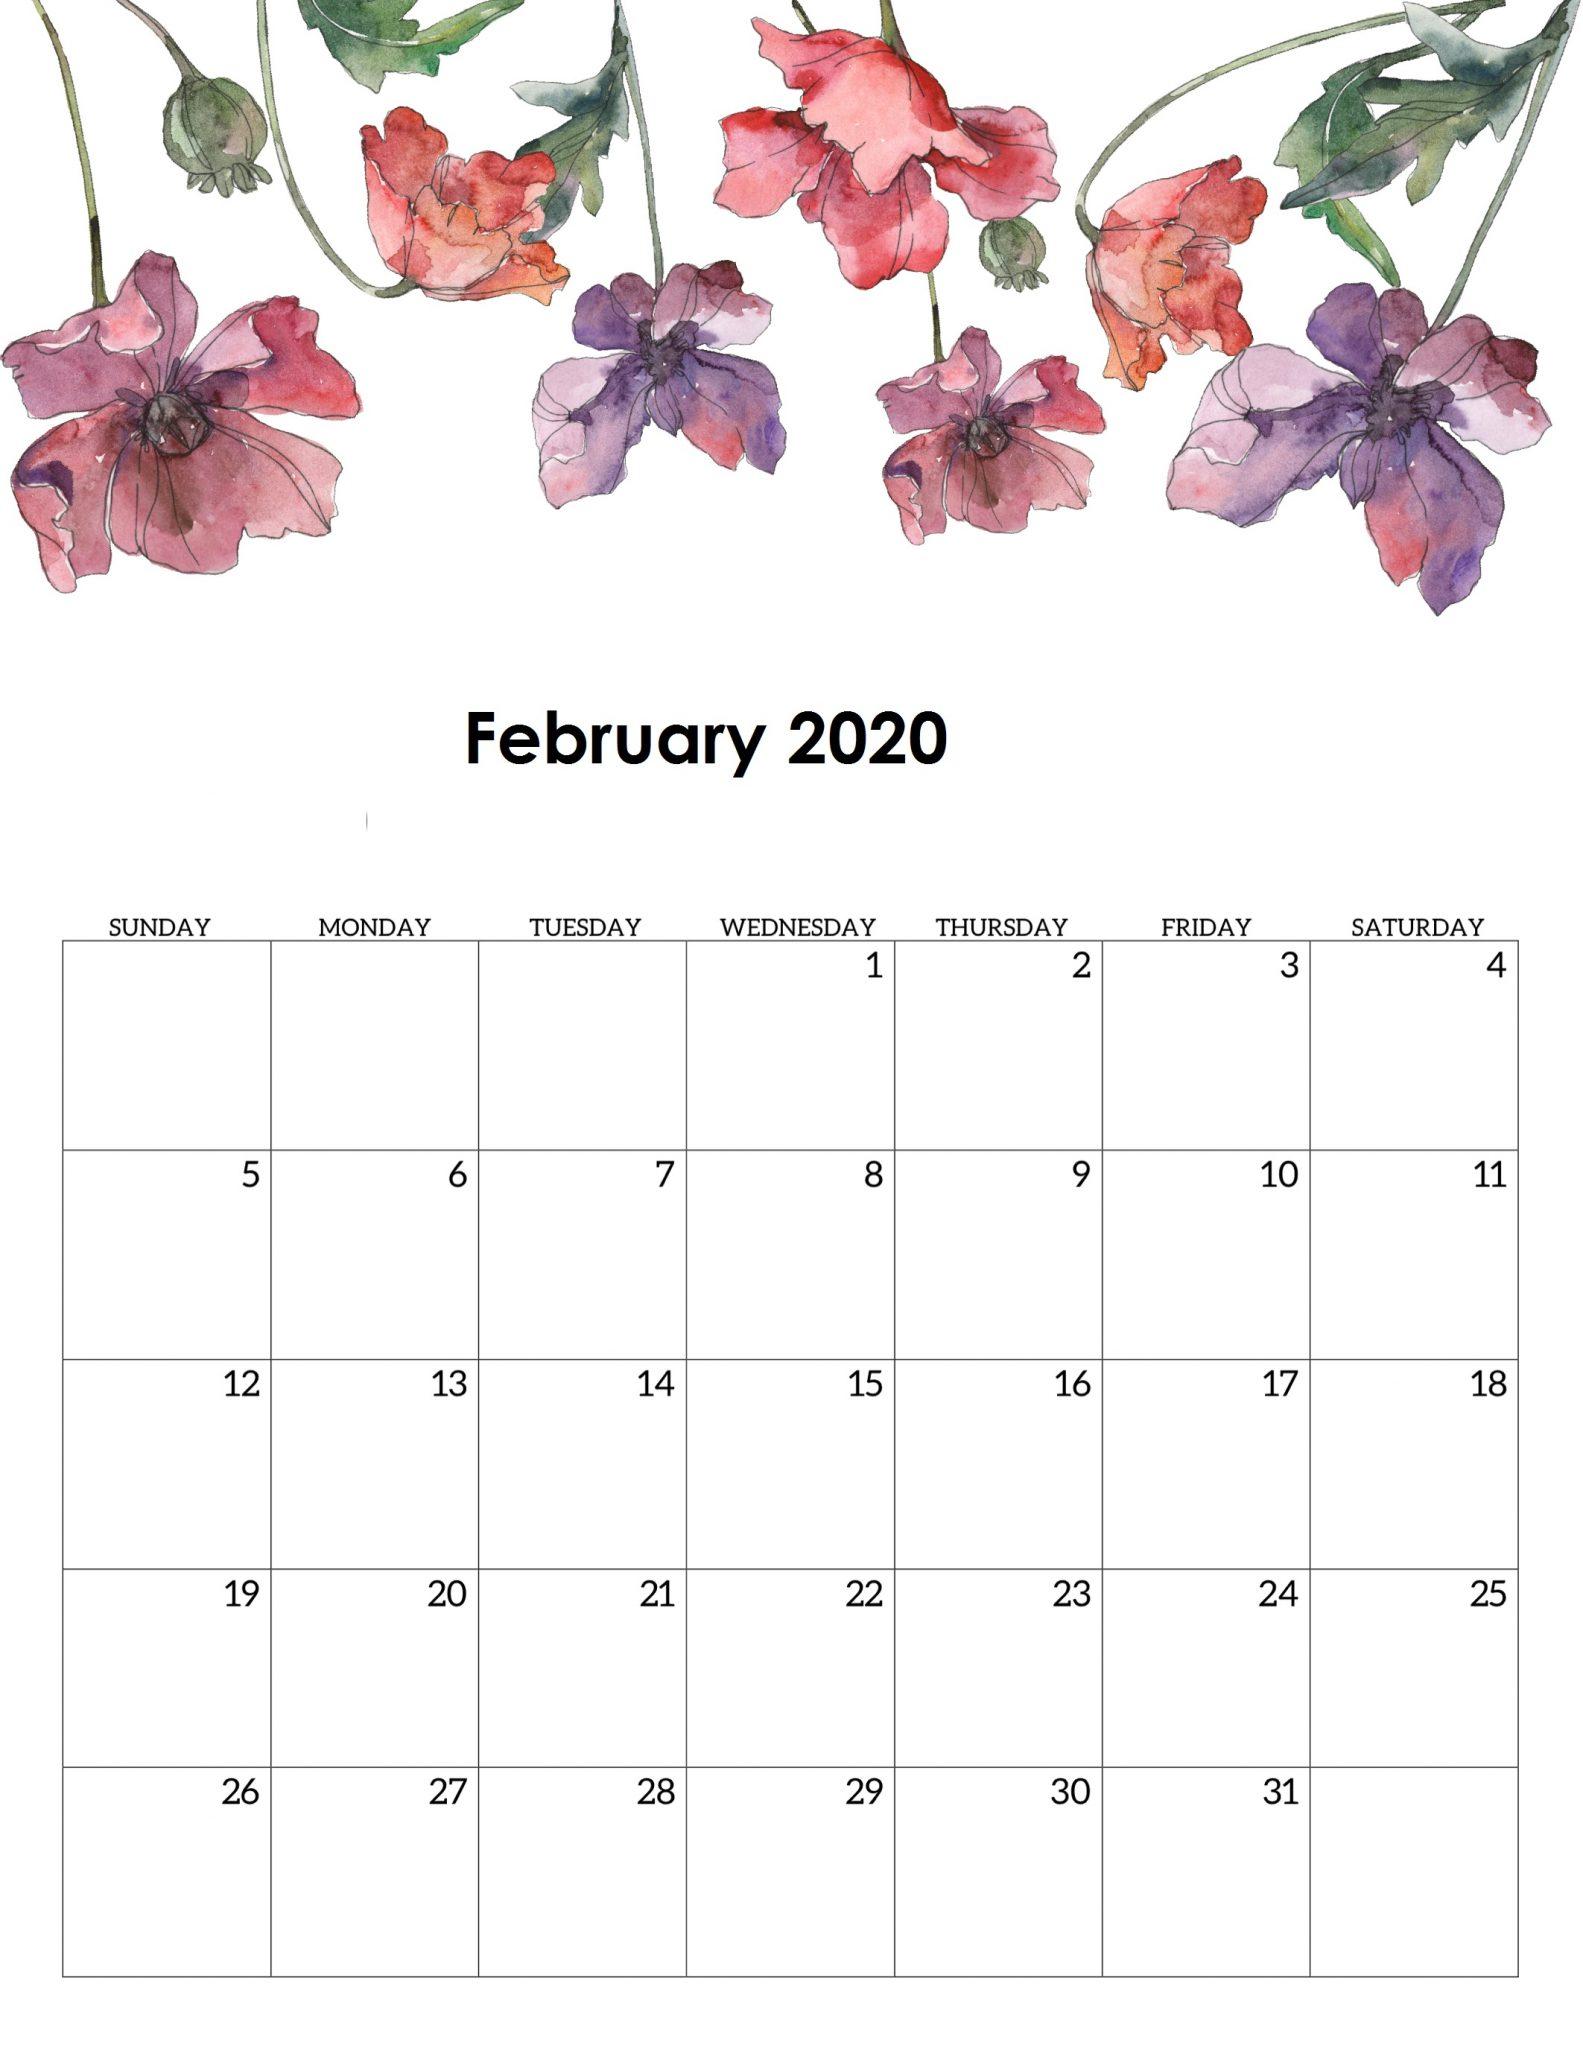 Floral February 2020 Calendar Wallpaper For Desktop, iPhone